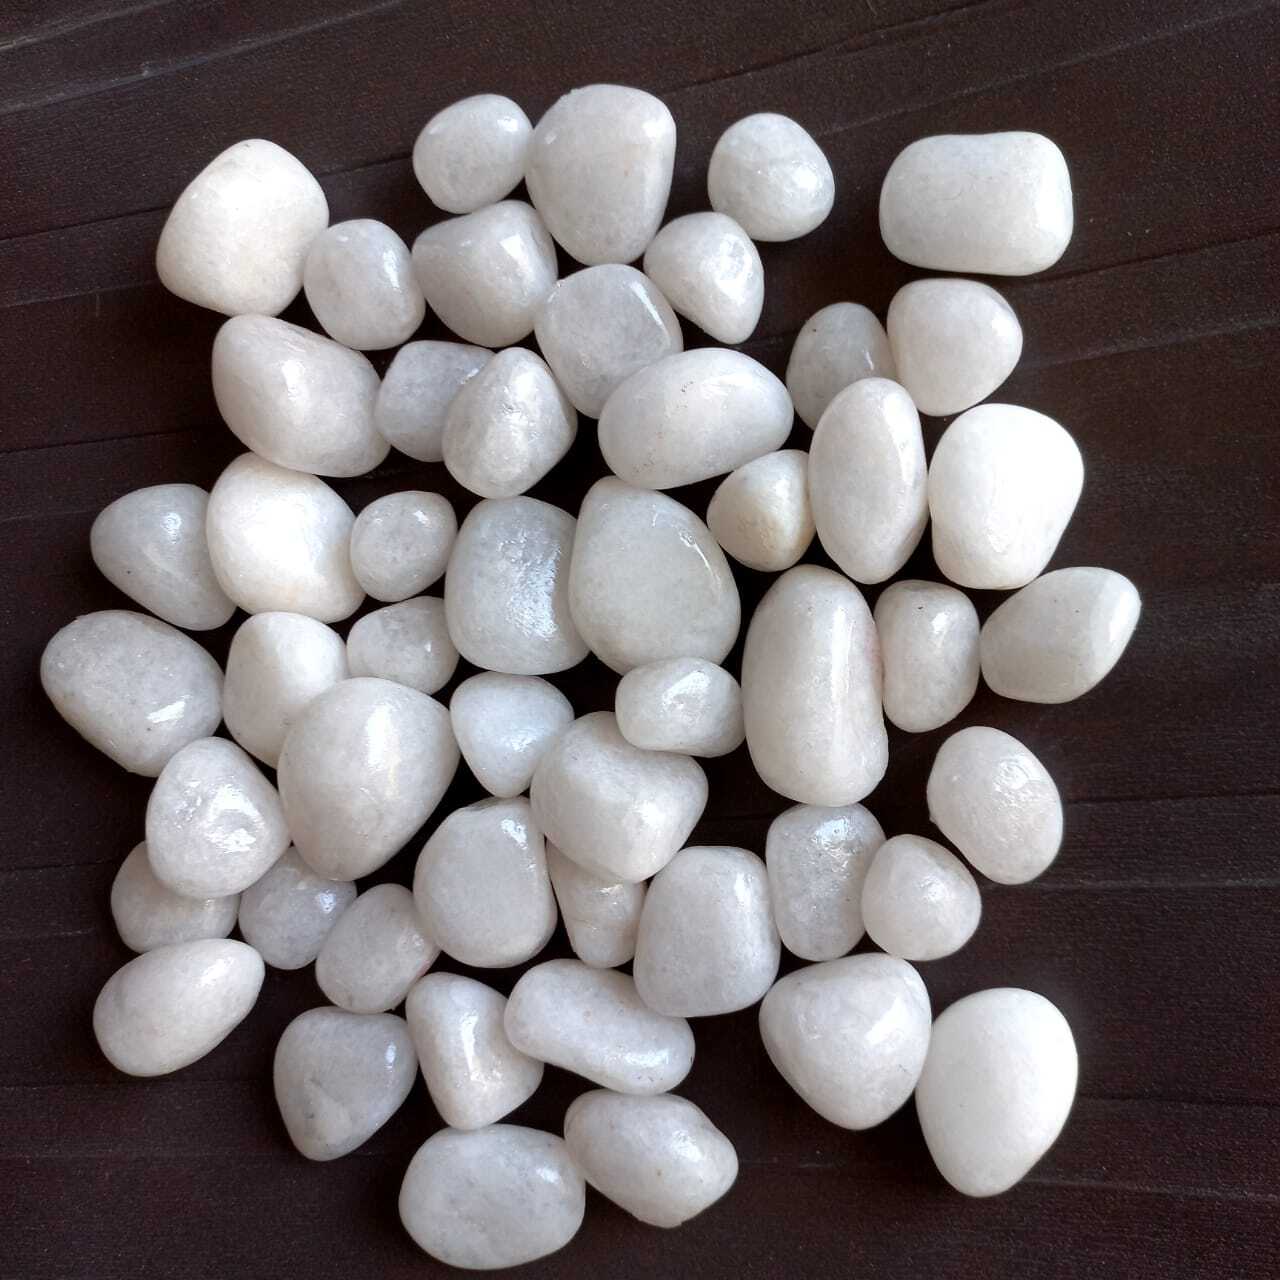 Pure White Crystal Quartz Lumps Quartz Crumbs for Industrial Purpose and Garden Decoration